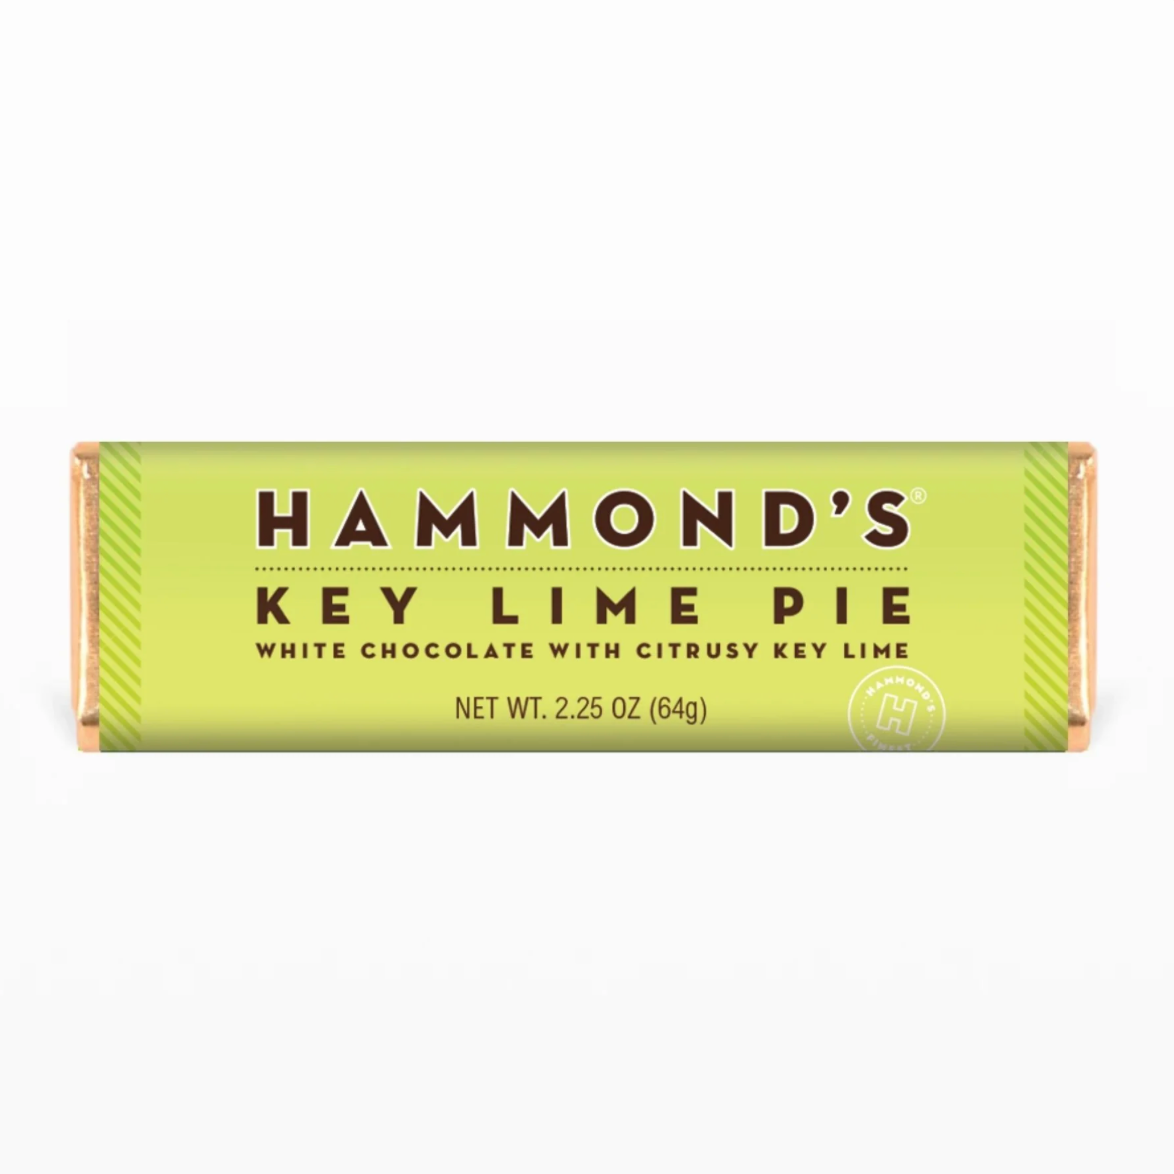 Hammond's Key Lime Pie